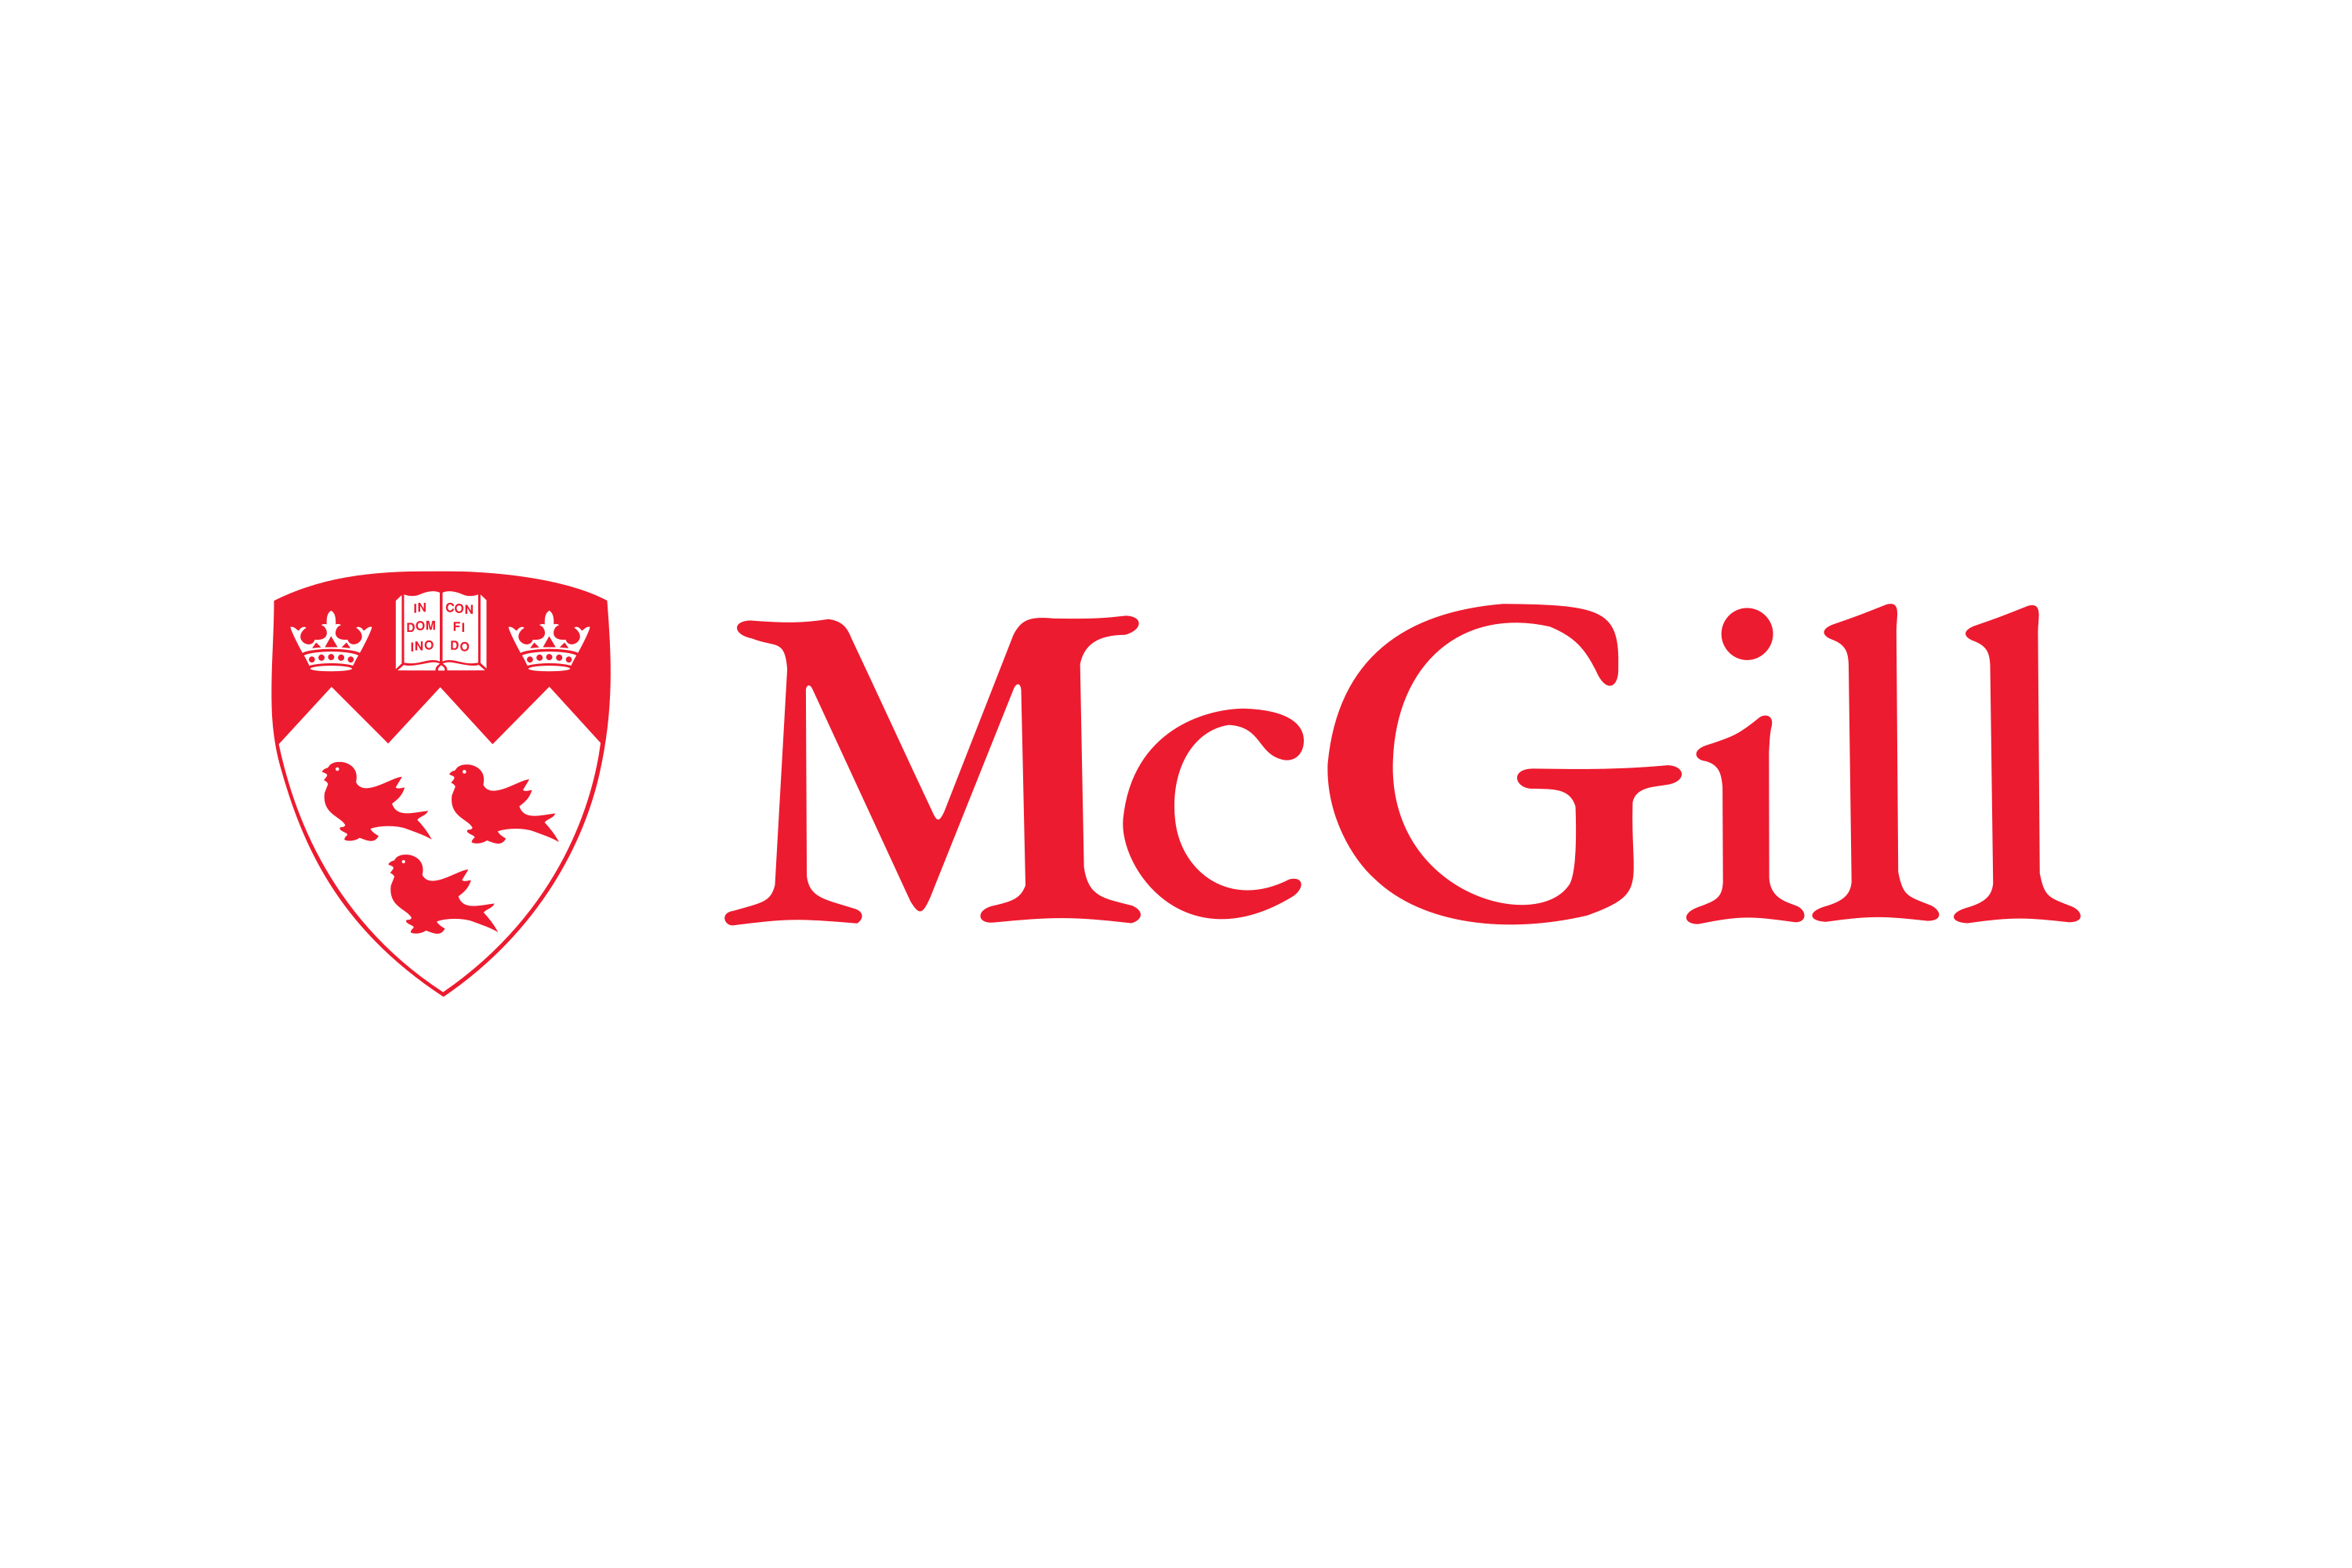 Download McGill University Logo in SVG Vector or PNG File Format - Logo